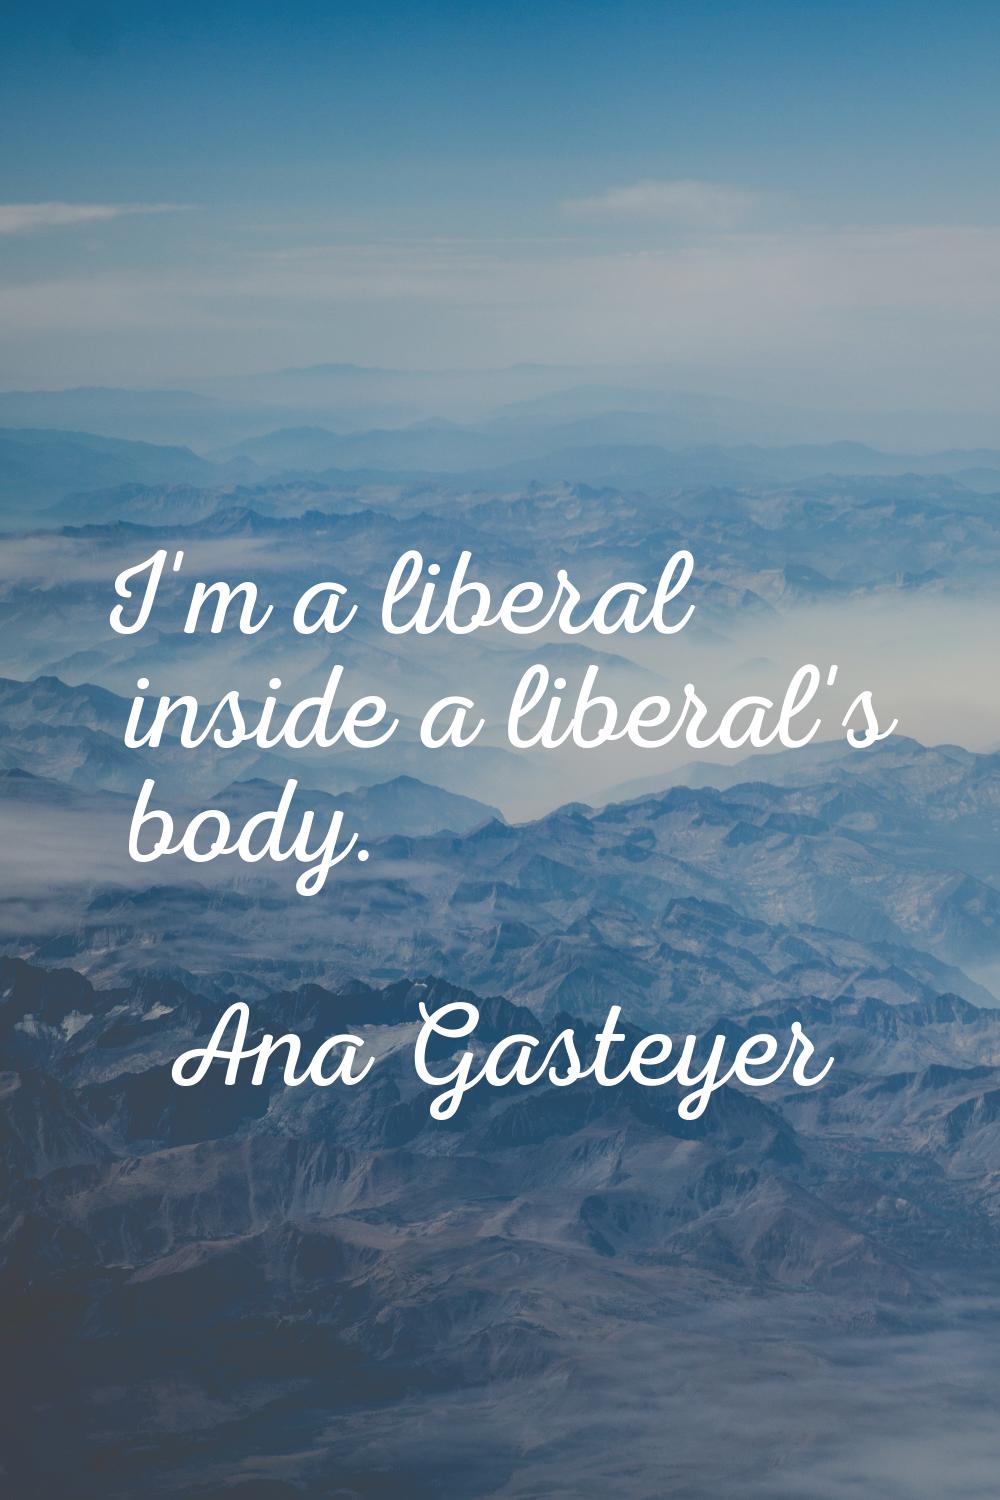 I'm a liberal inside a liberal's body.